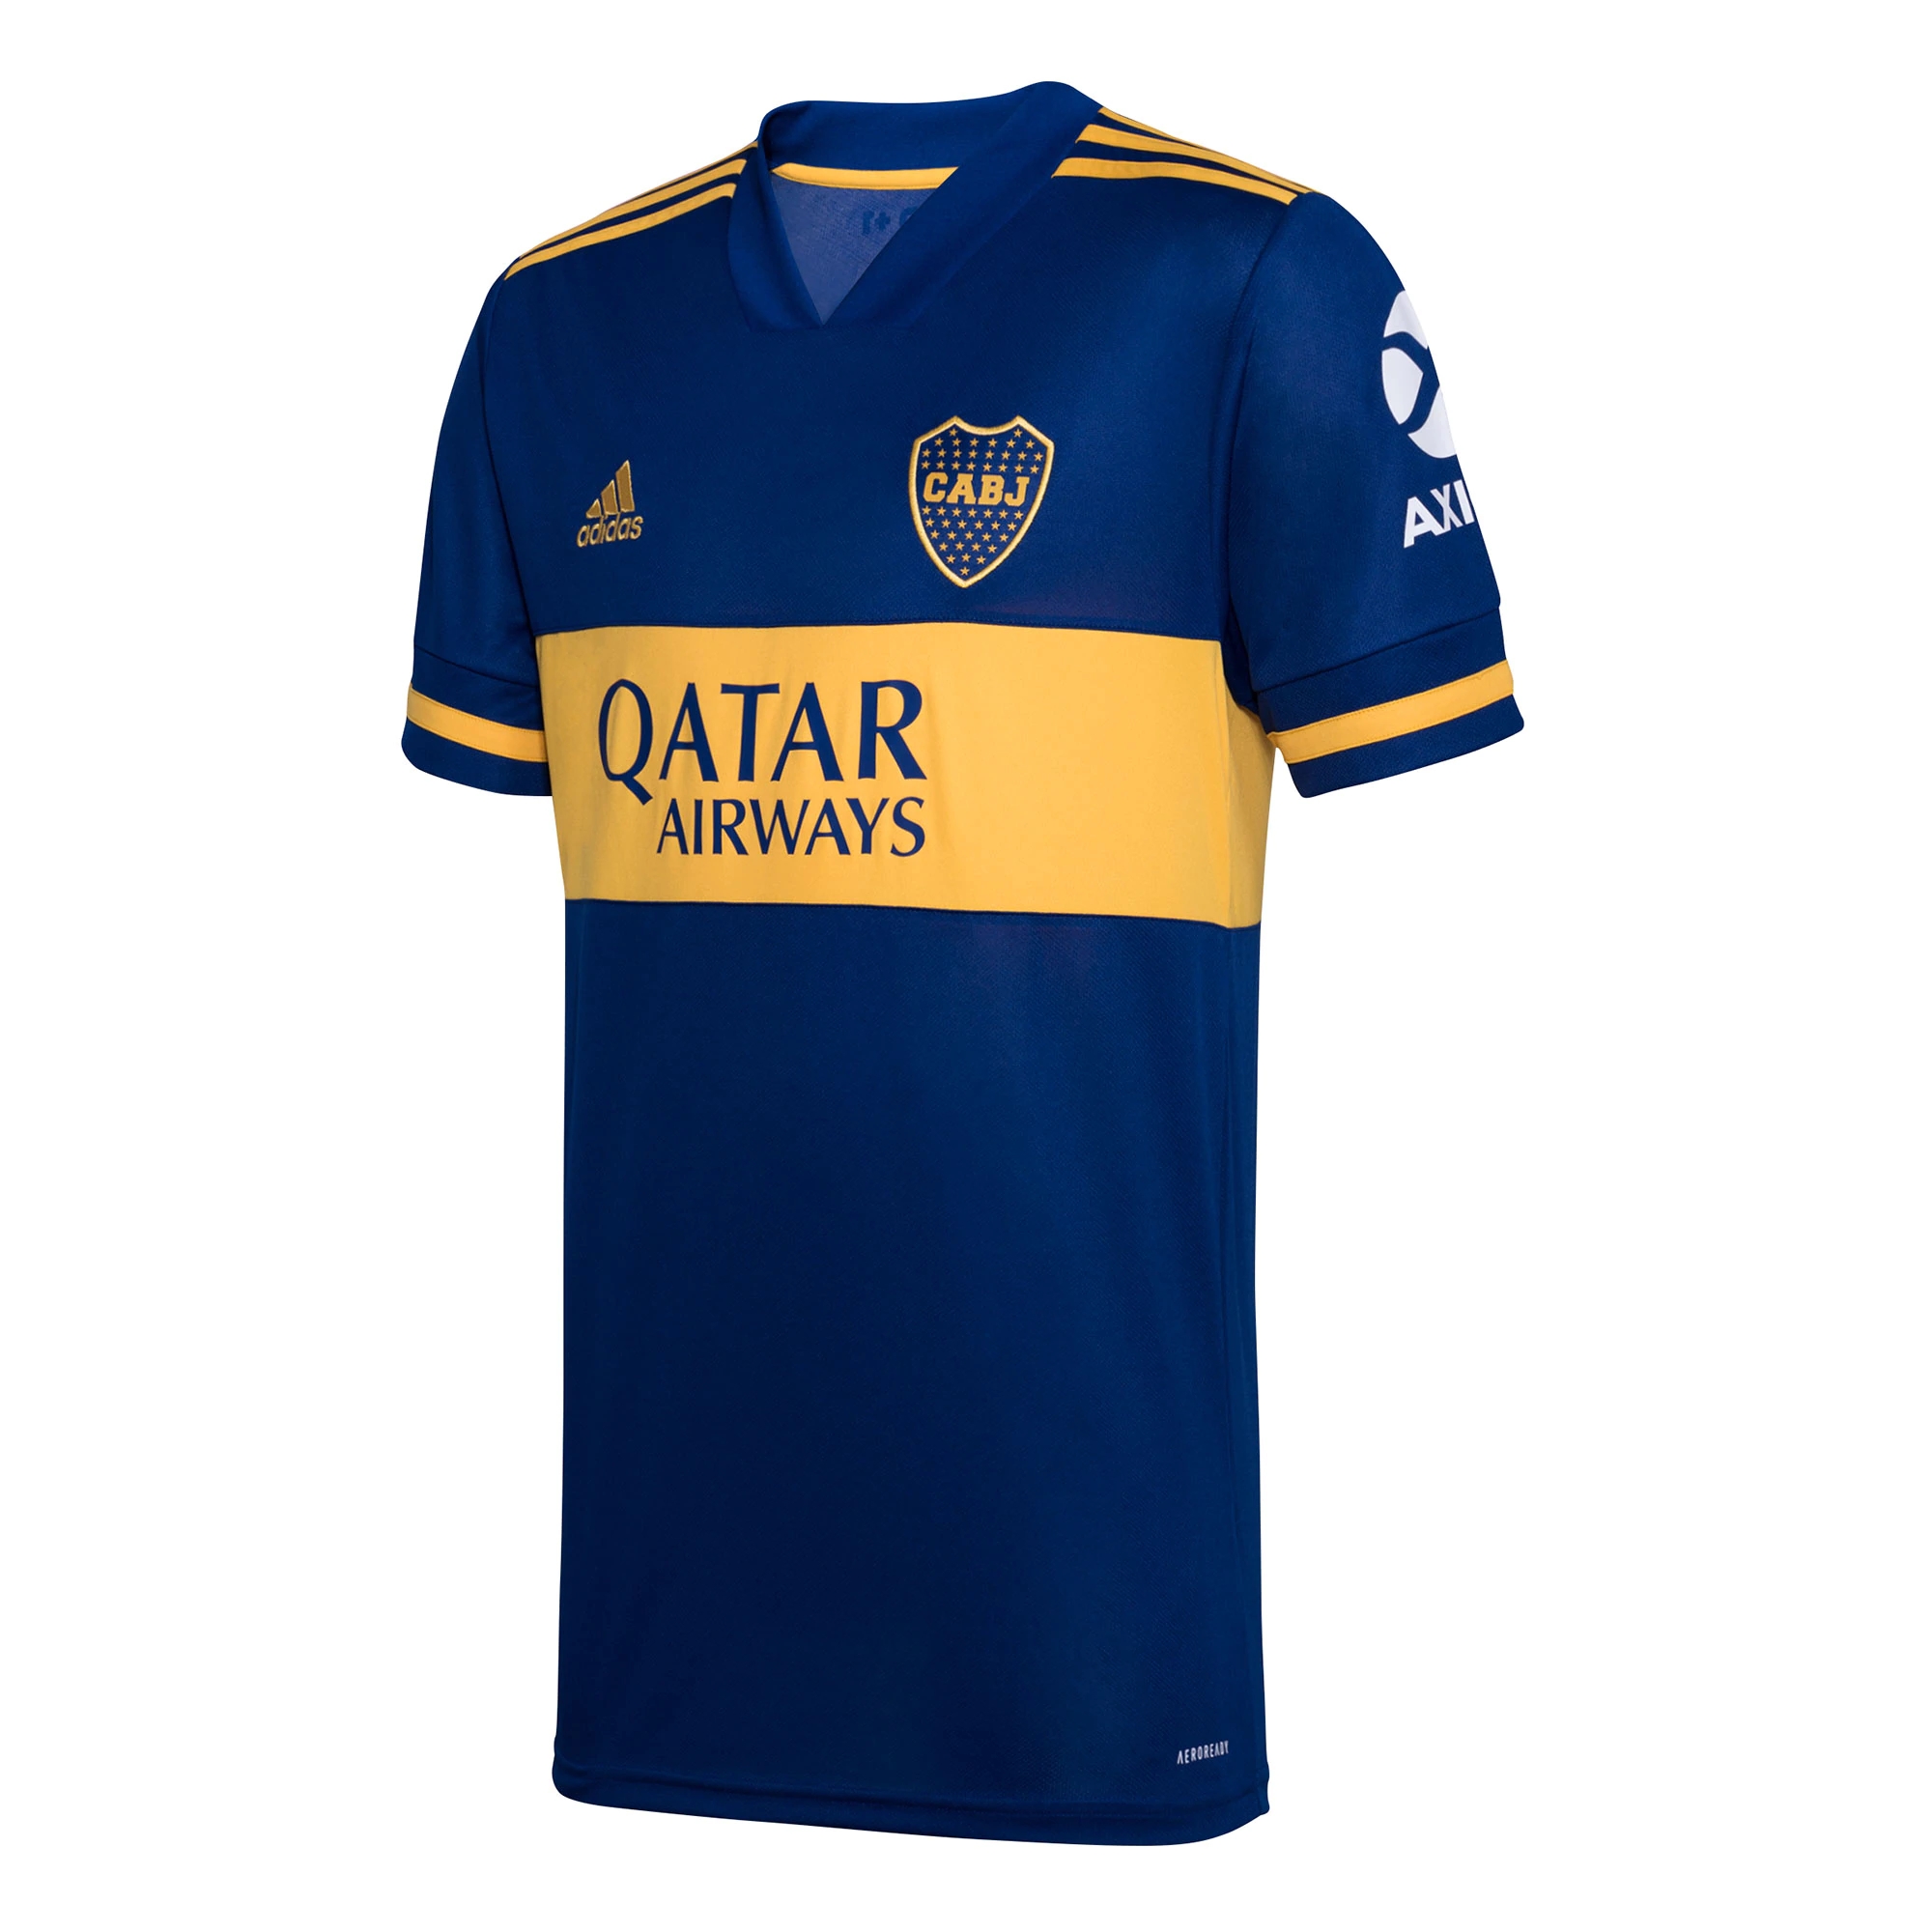 Authentic Adidas Boca Juniors Home Soccer Jersey 2020/21